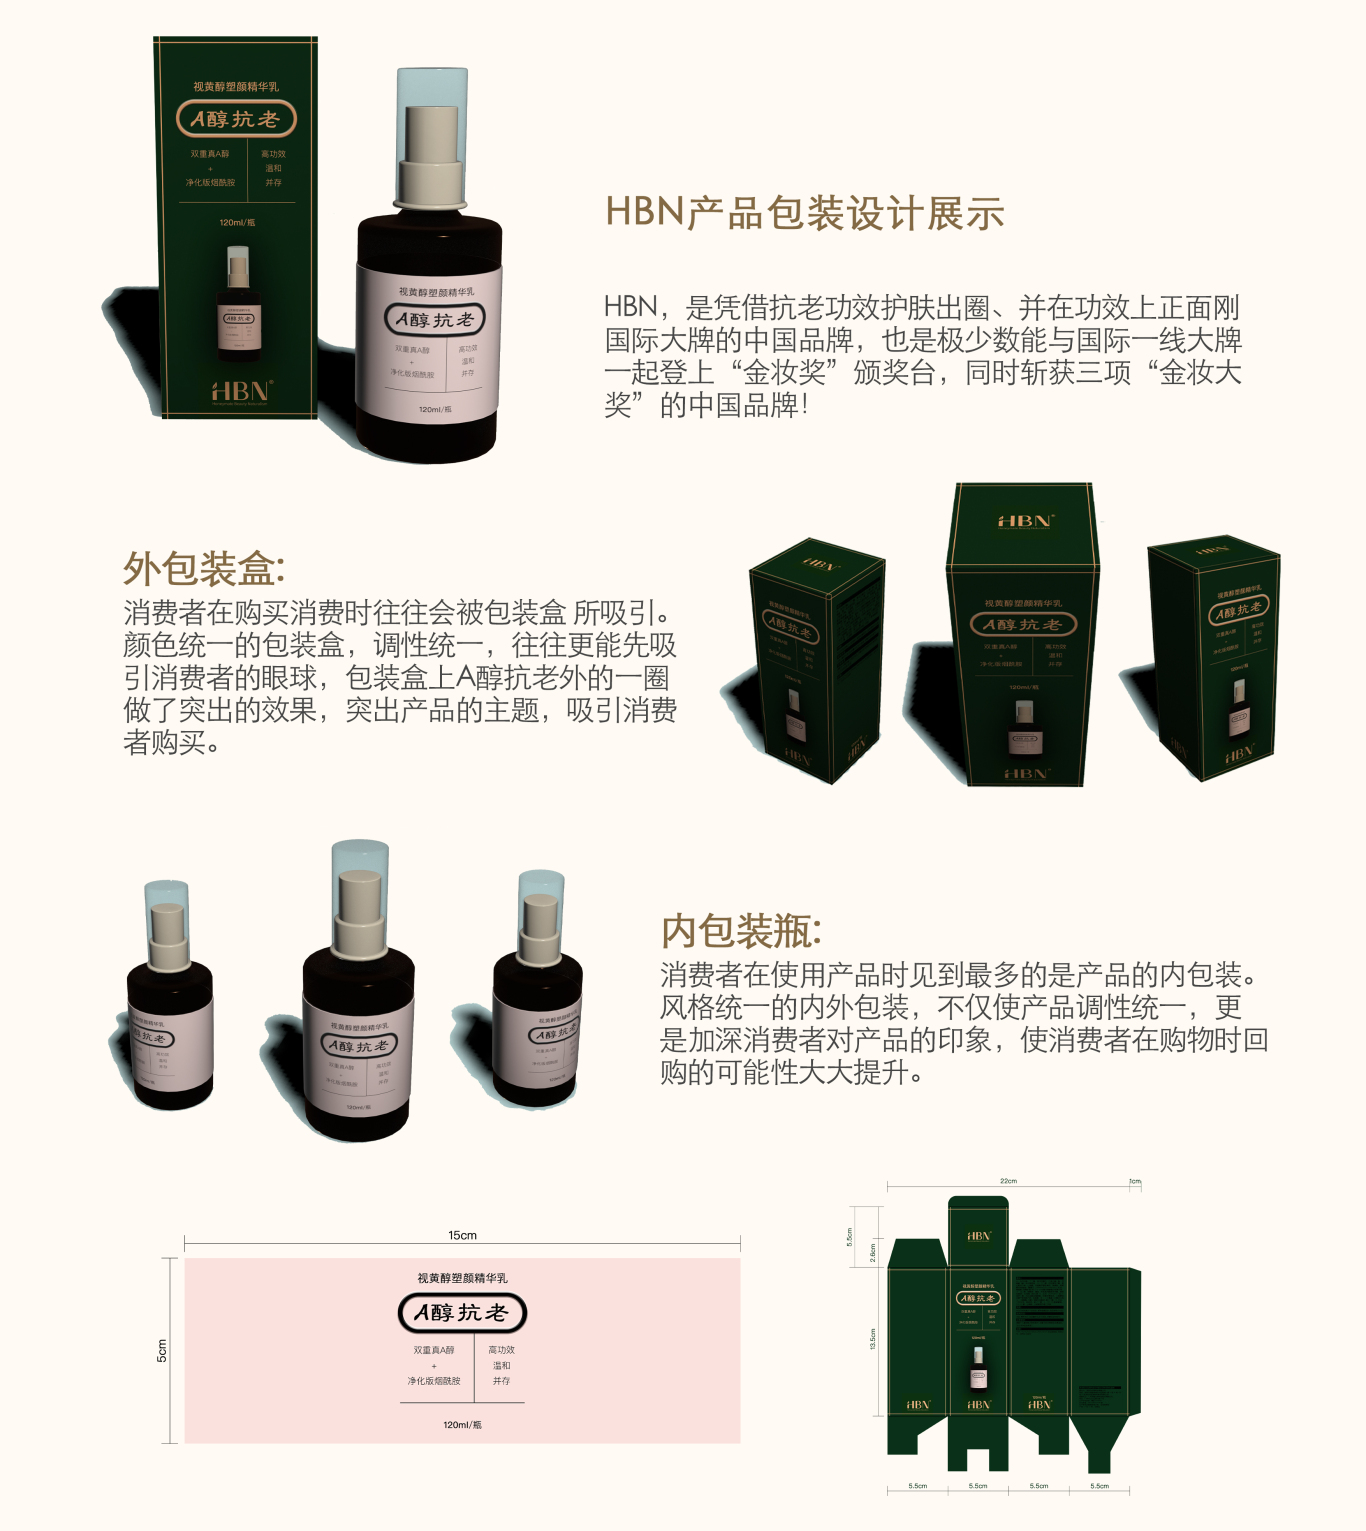 HBN抗老化妝品包裝設計圖0